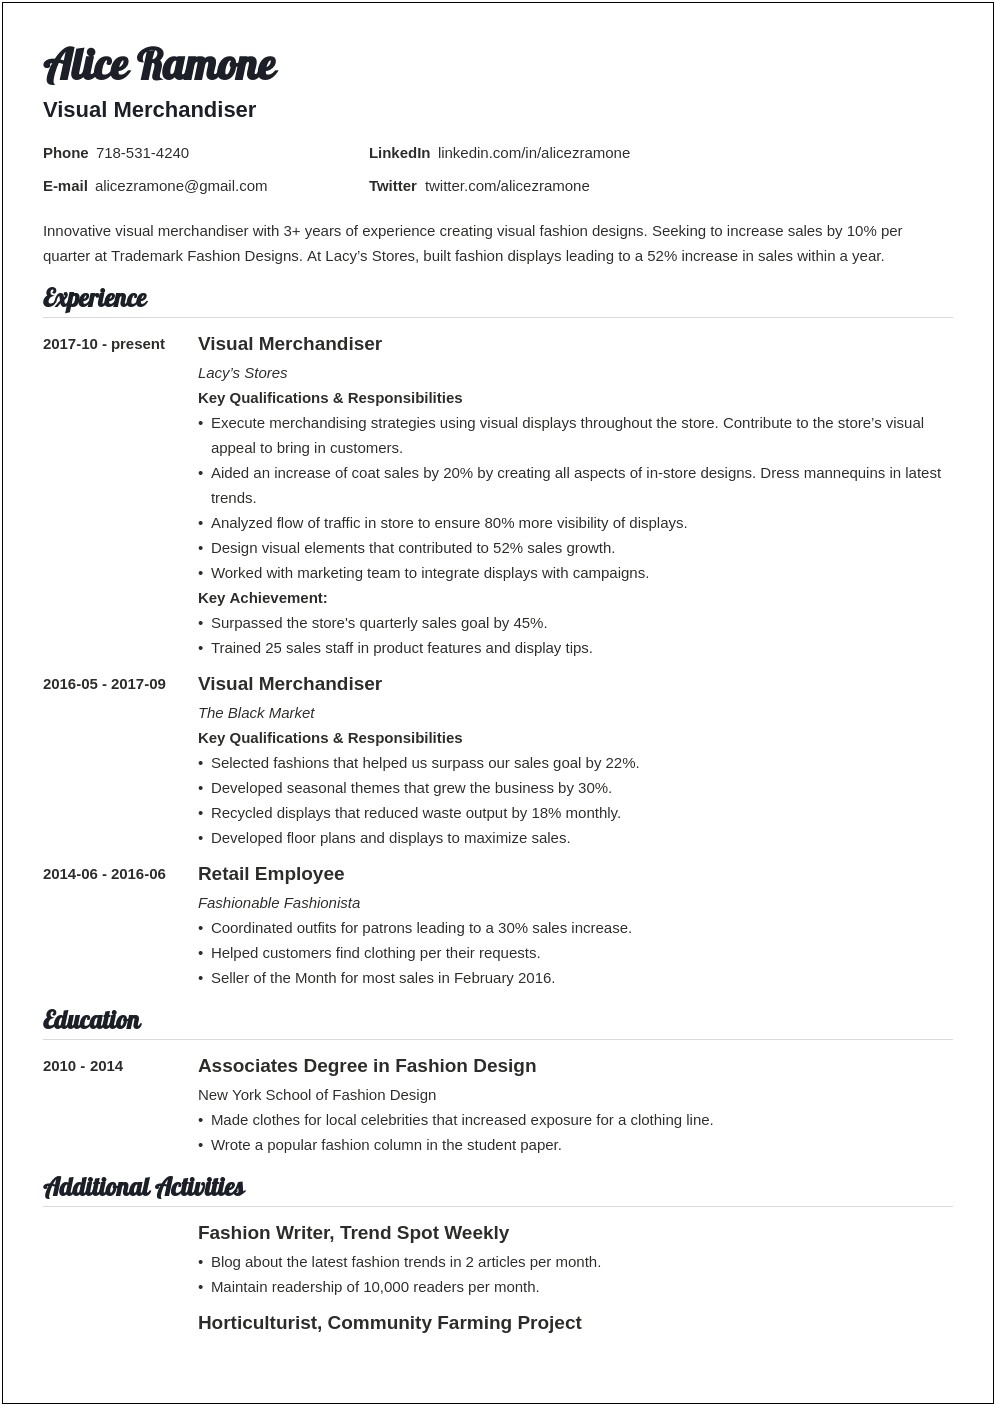 Merchandising Manager Job Description For Resume